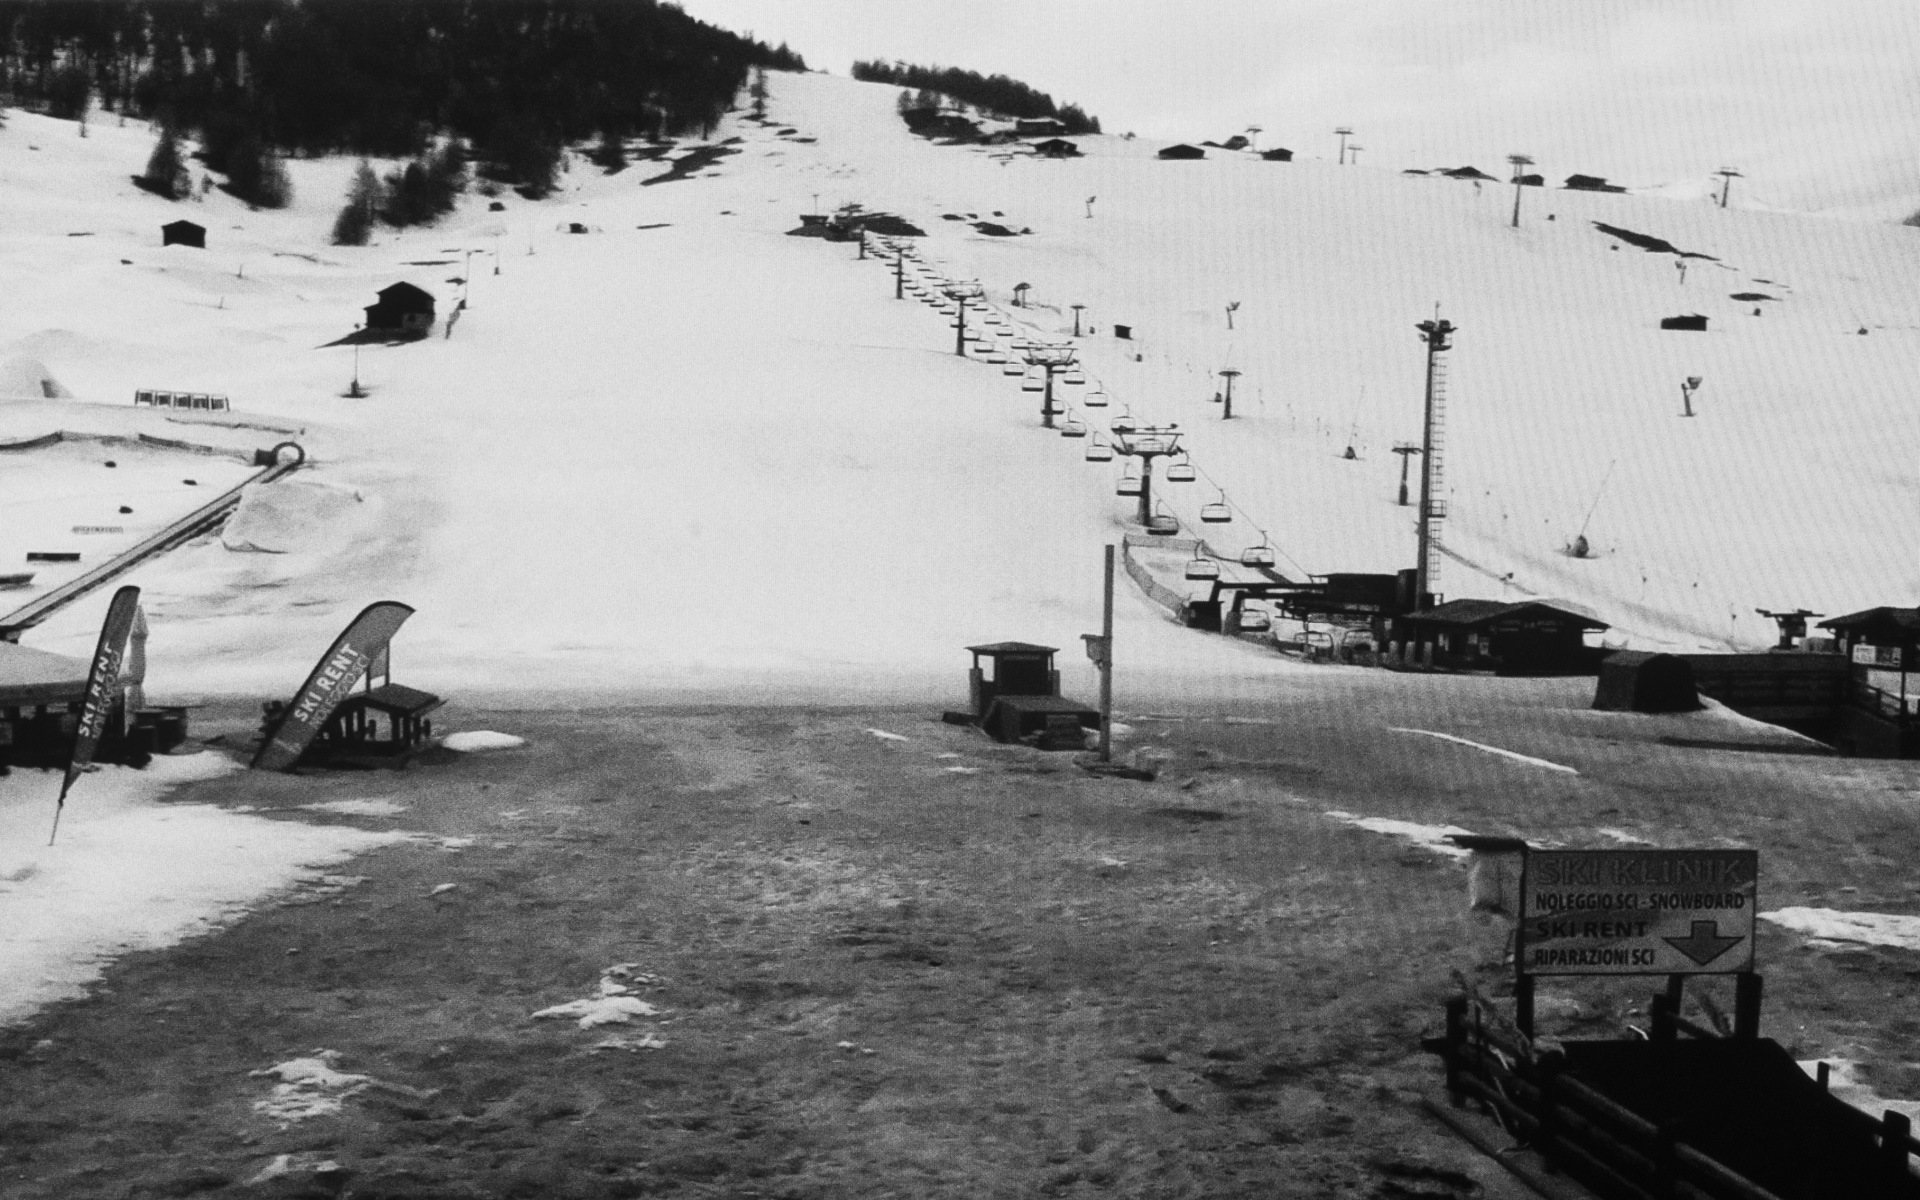 Livigno, Ski Center - One of the many empty ski lifts of Livigno ski center, Province Sondorio. March 29. 2020.